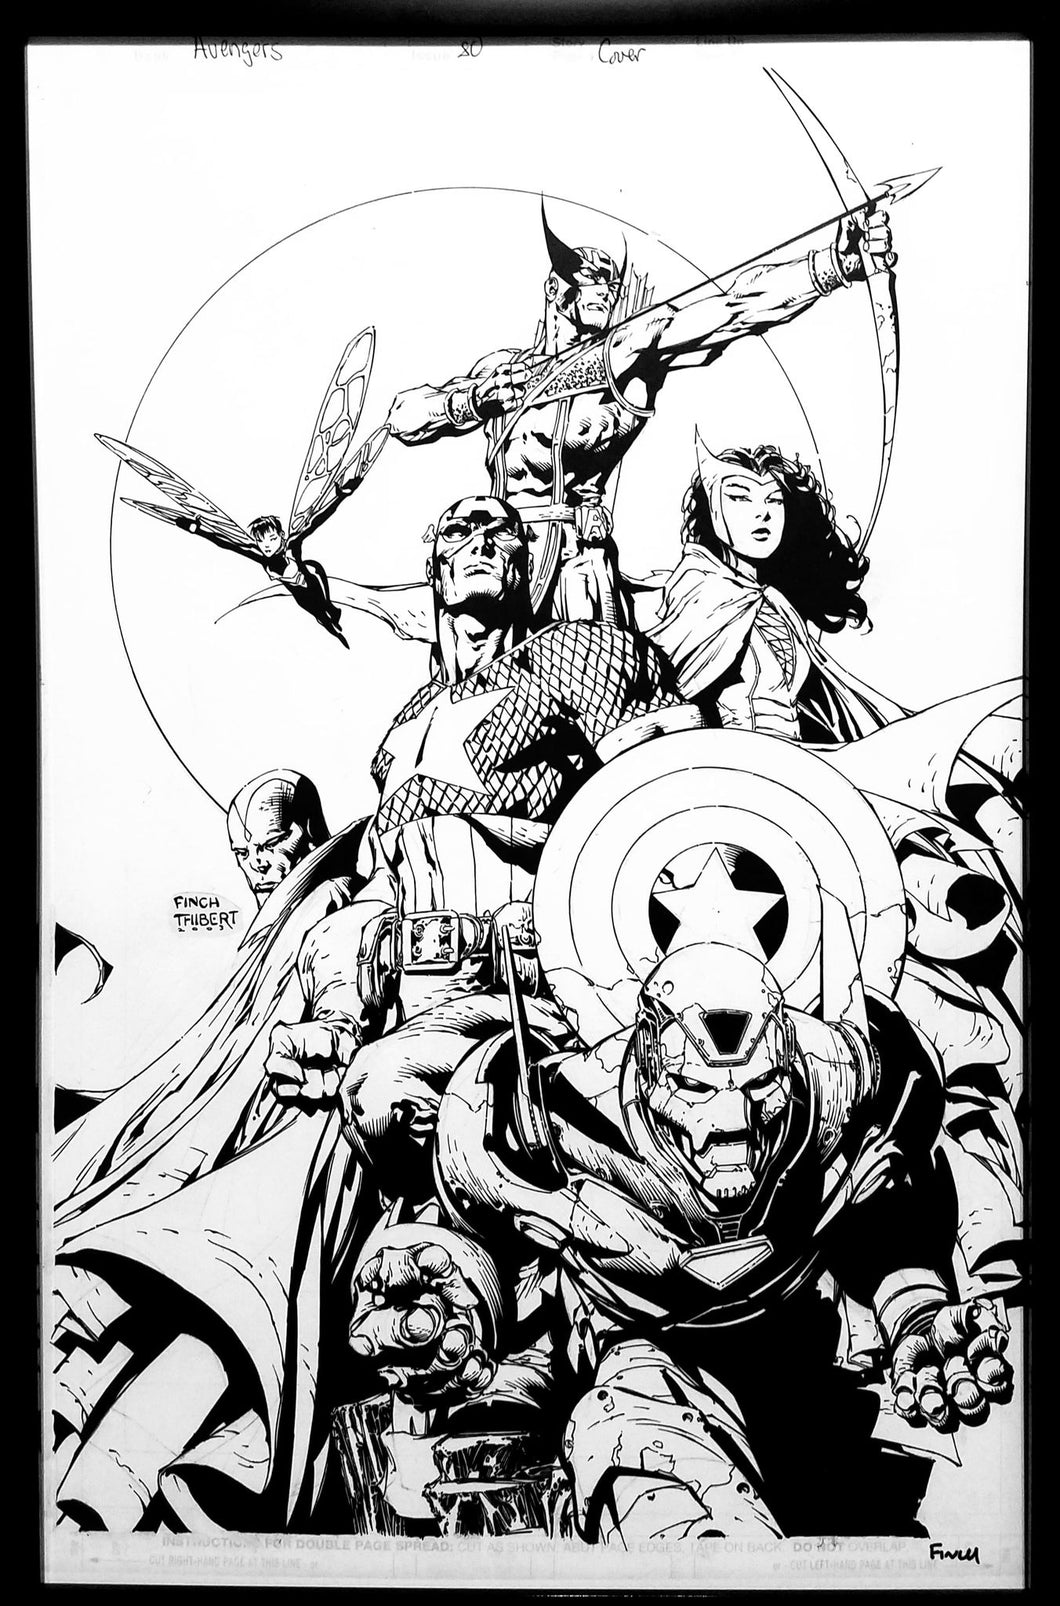 Avengers #80 by David Finch 11x17 FRAMED Original Art Poster Marvel Comics